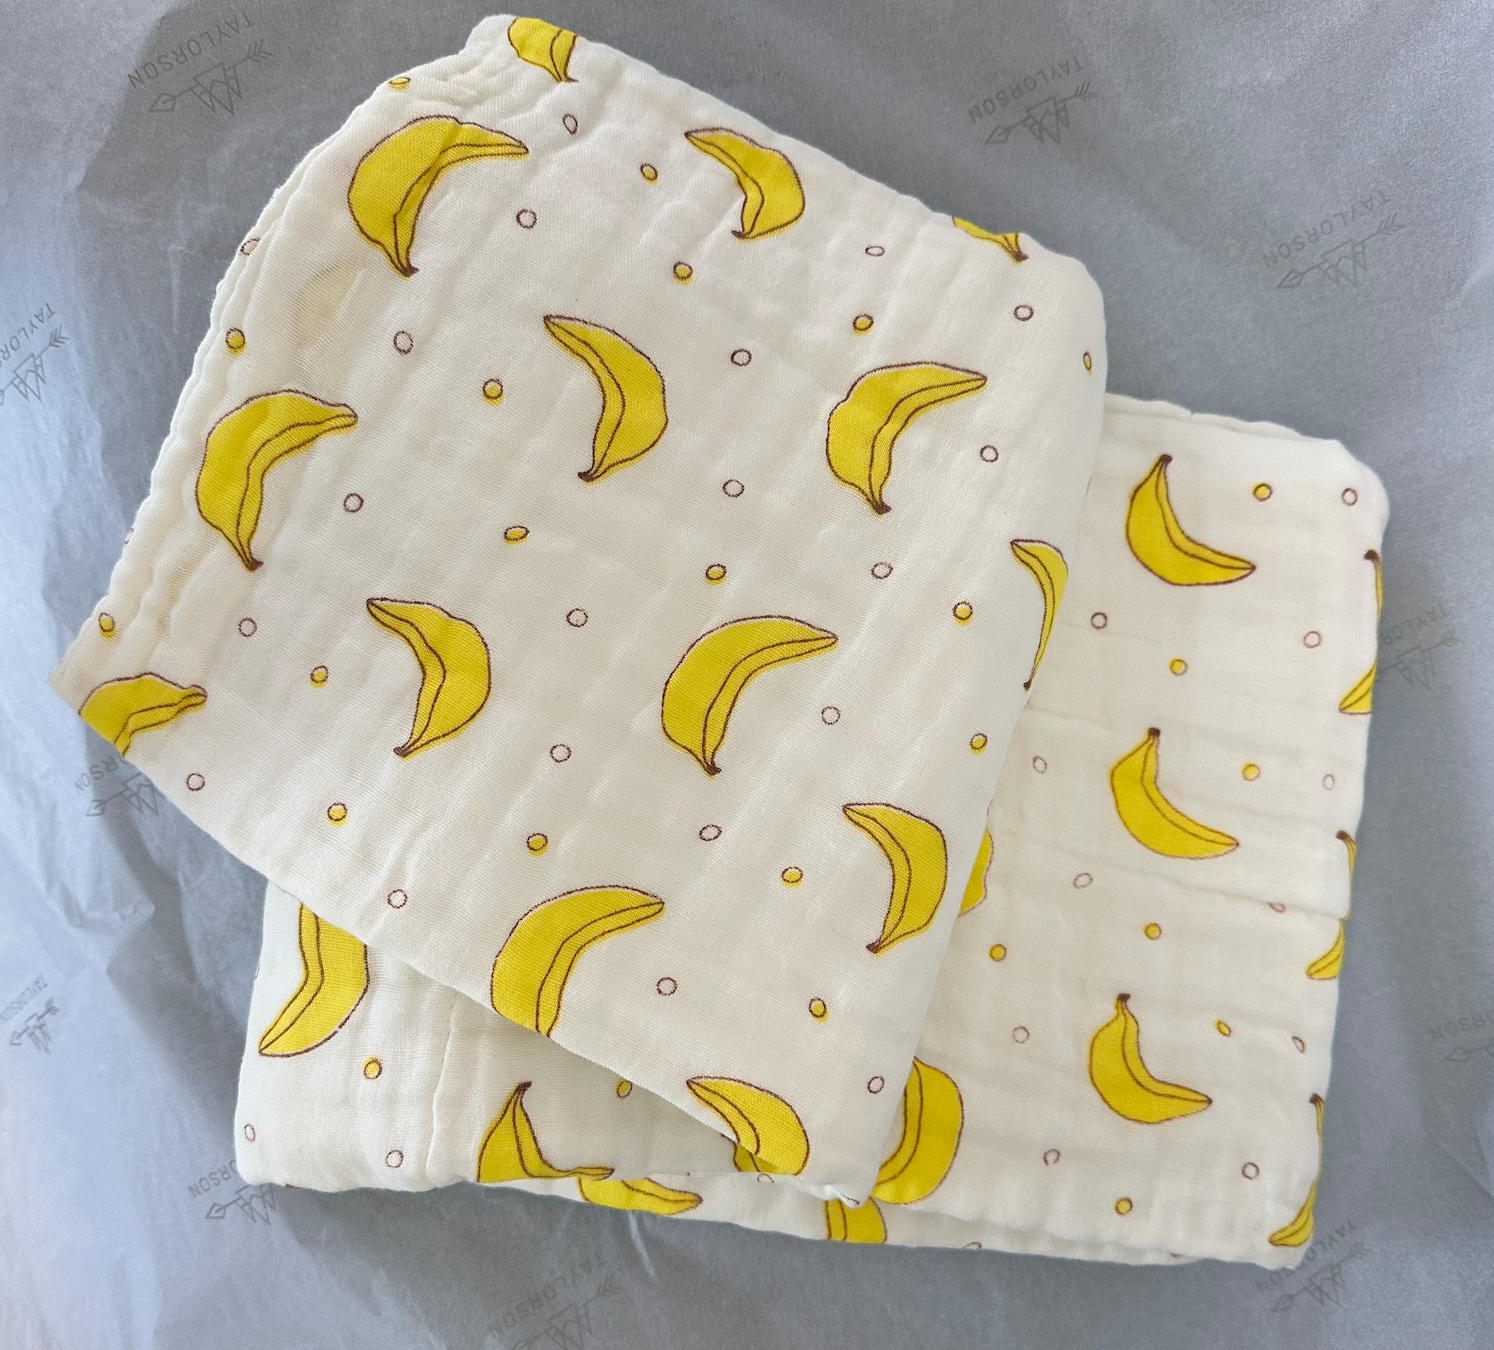 6-Layer Super Soft Muslin Cotton Baby Bath Towel - Banana (110x110cm) - Taylorson